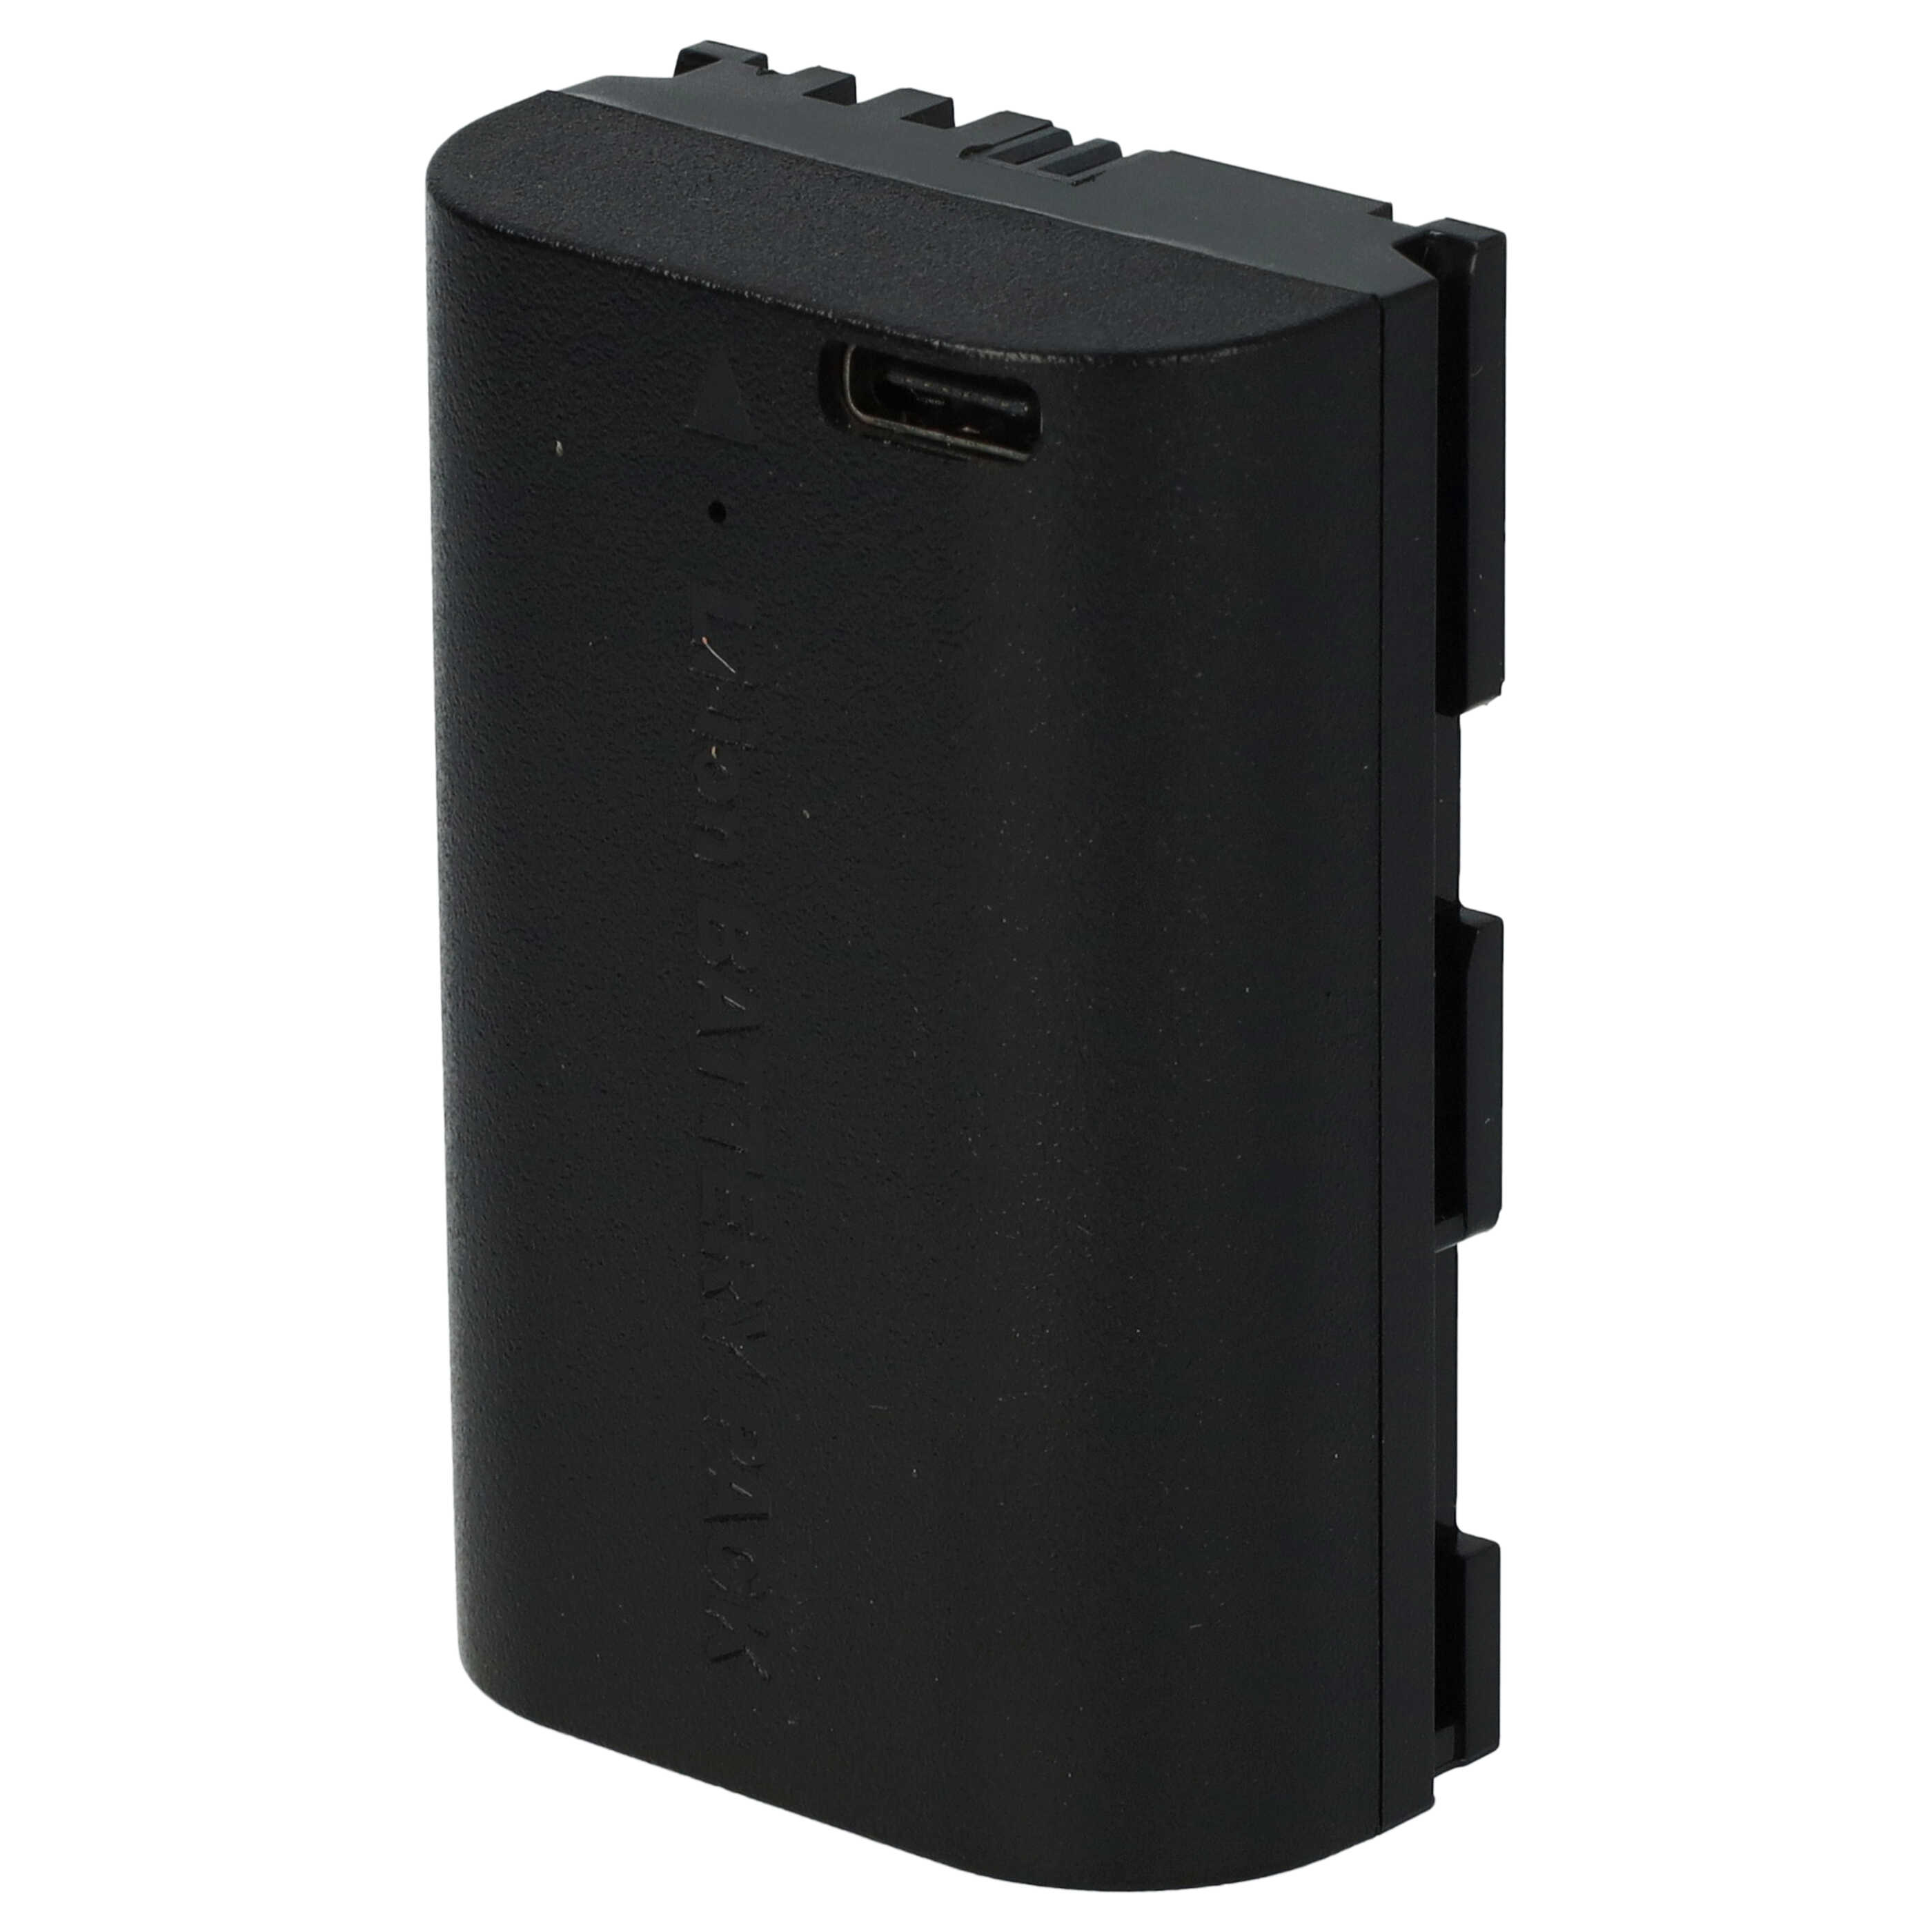 Akumulator do aparatu cyfrowego zamiennik Canon LP-E6 - 1600 mAh 7,4 V Li-Ion, z portem USB-C